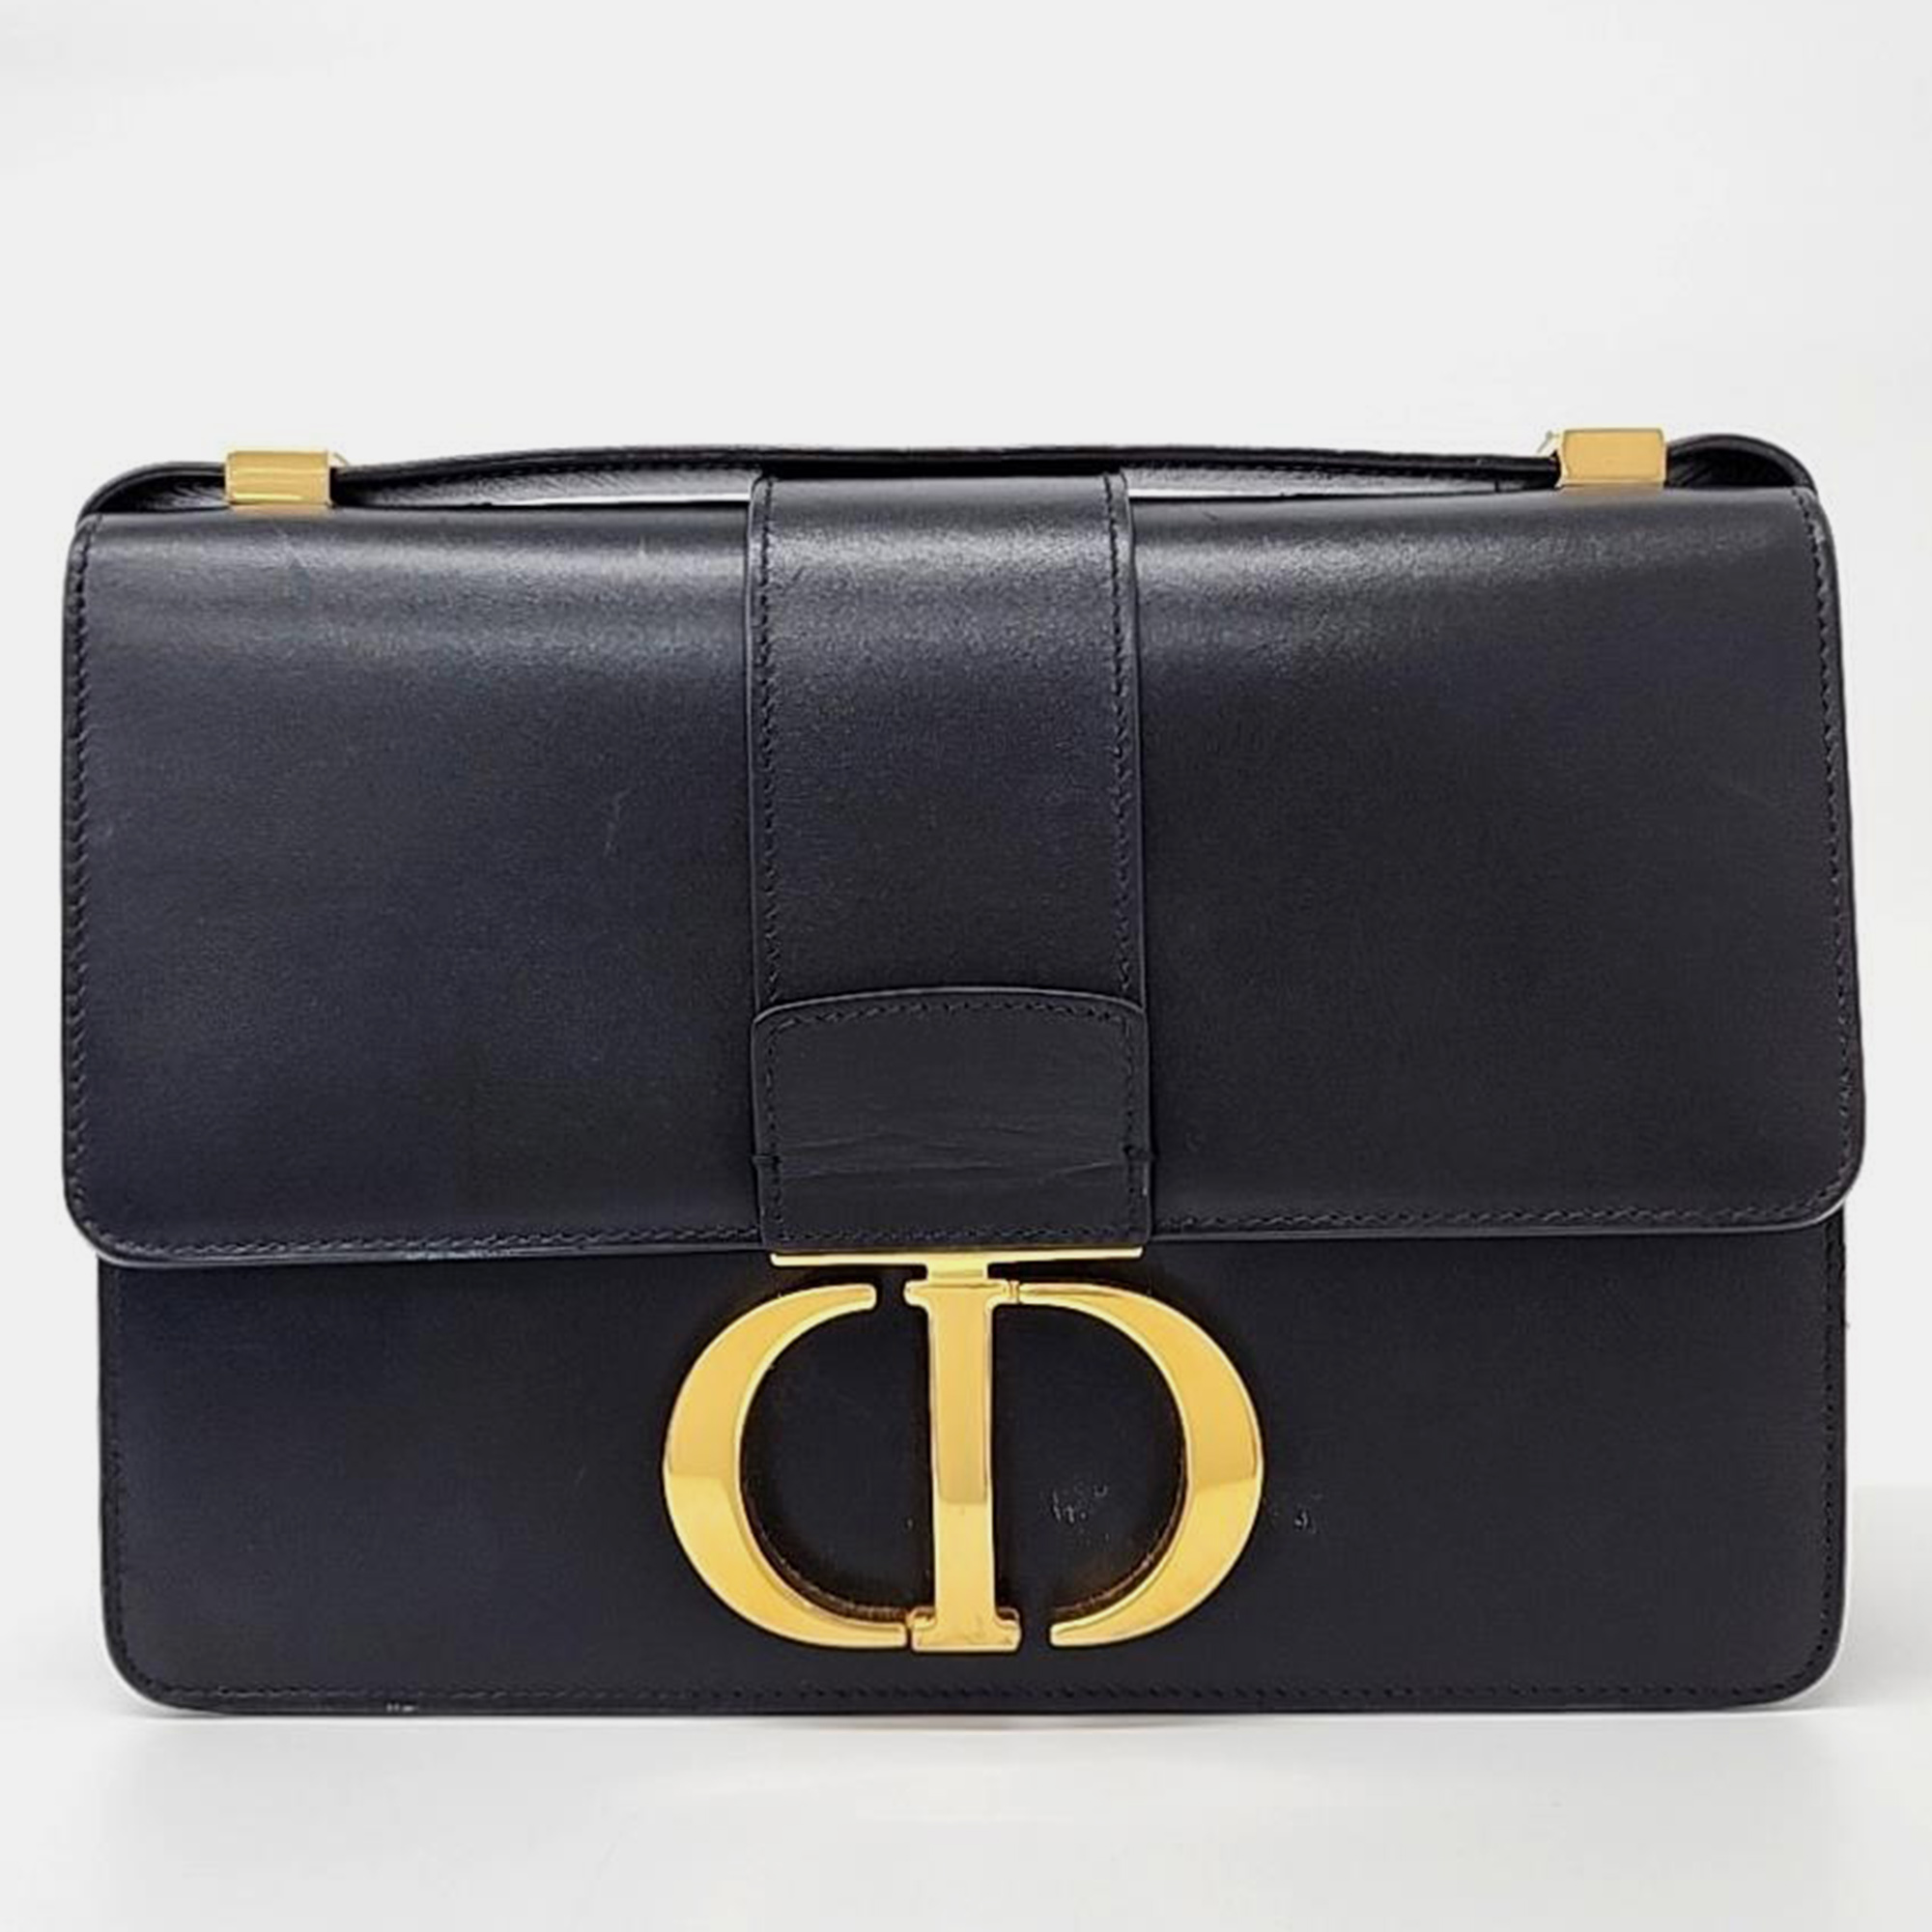 Dior black leather 30 montaigne shoulder bag